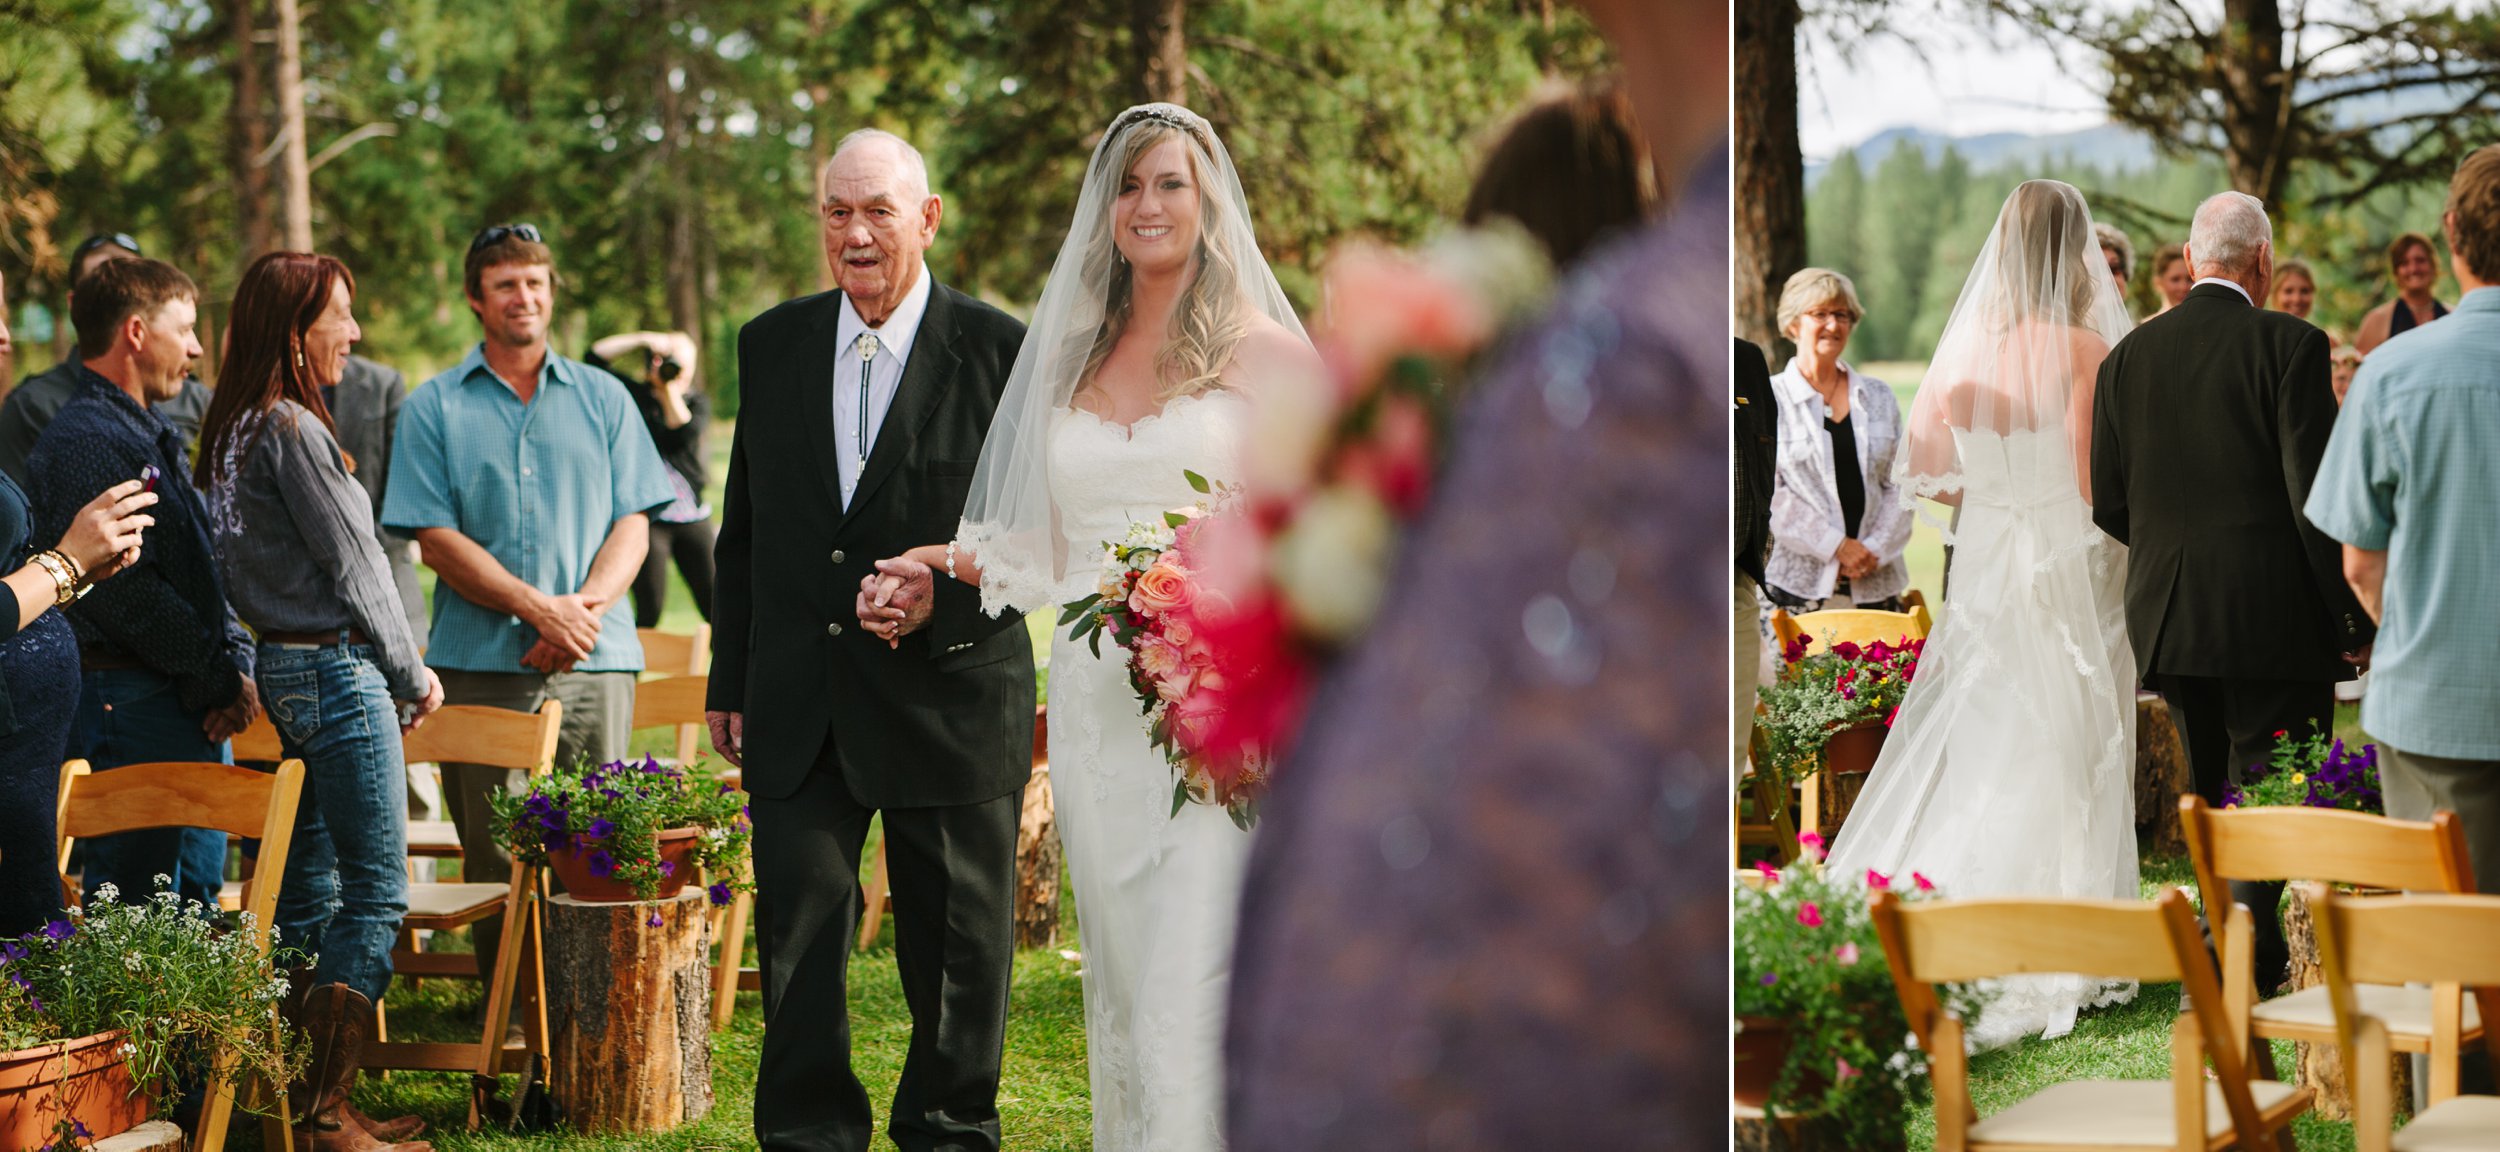 Double Arrow Resort Seeley Lake MT Wedding Photos Ceremony